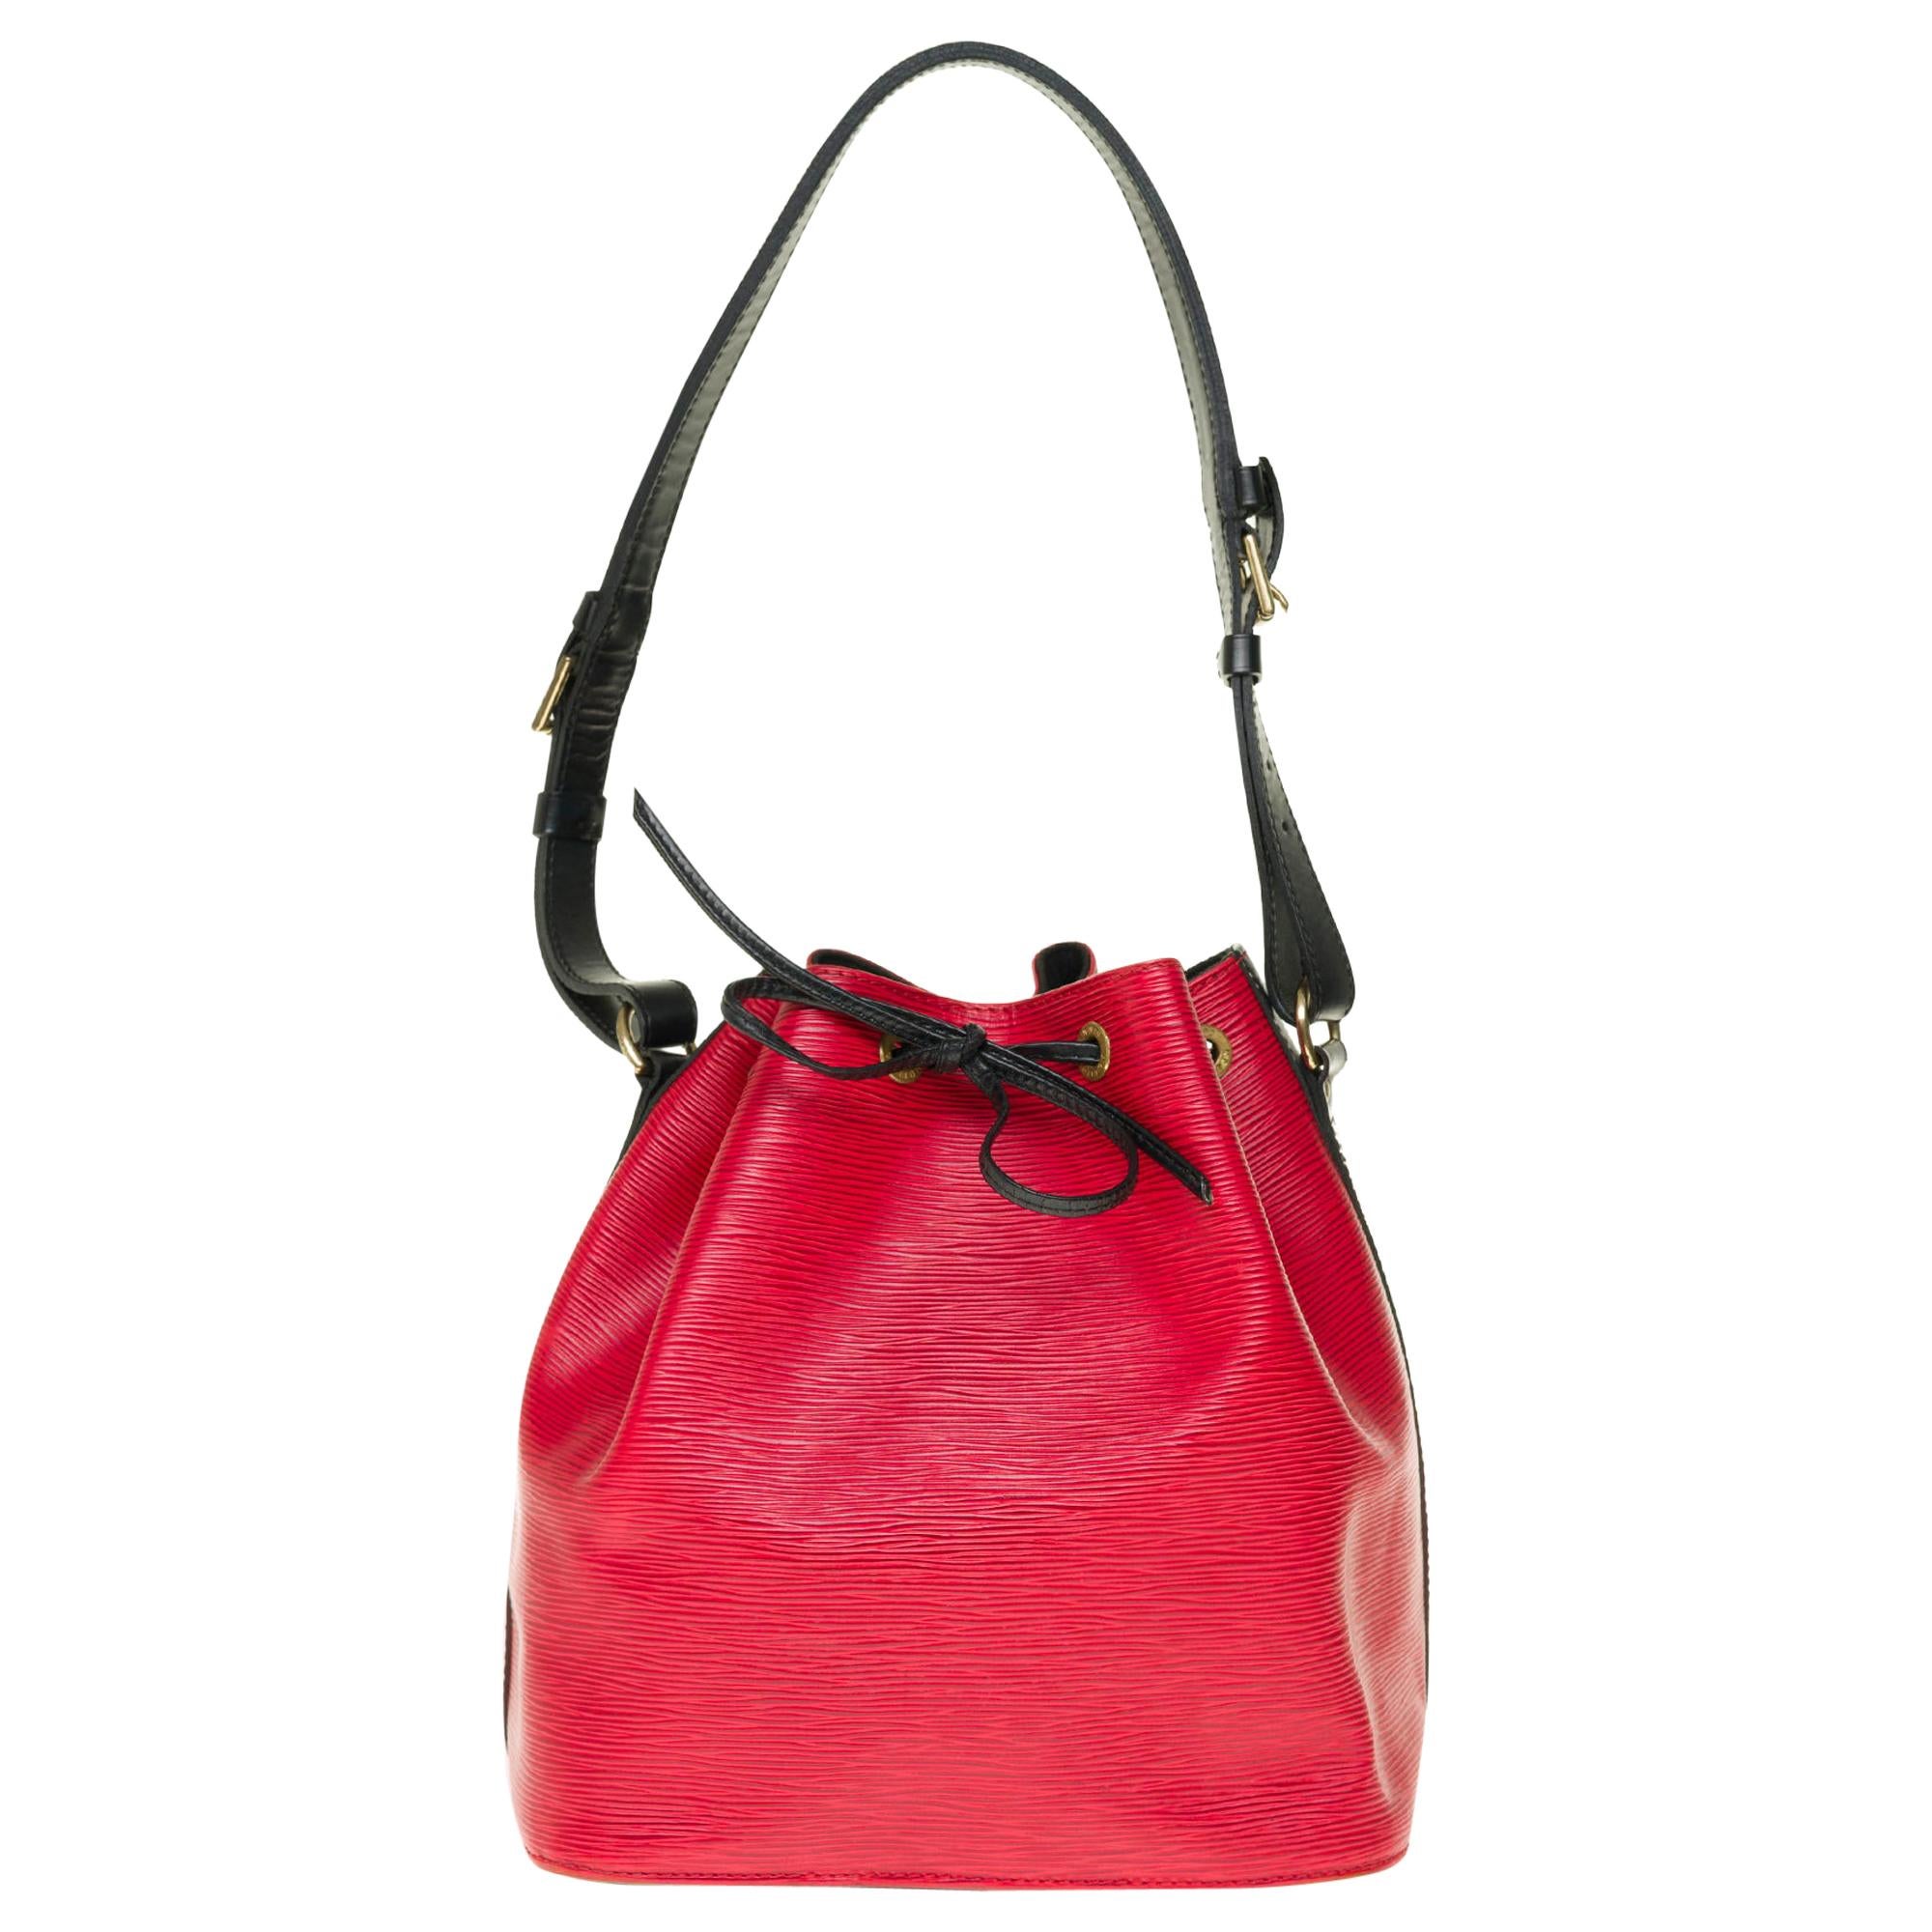 Louis Vuitton Noé Grand modele shoulder bag in red epi leather